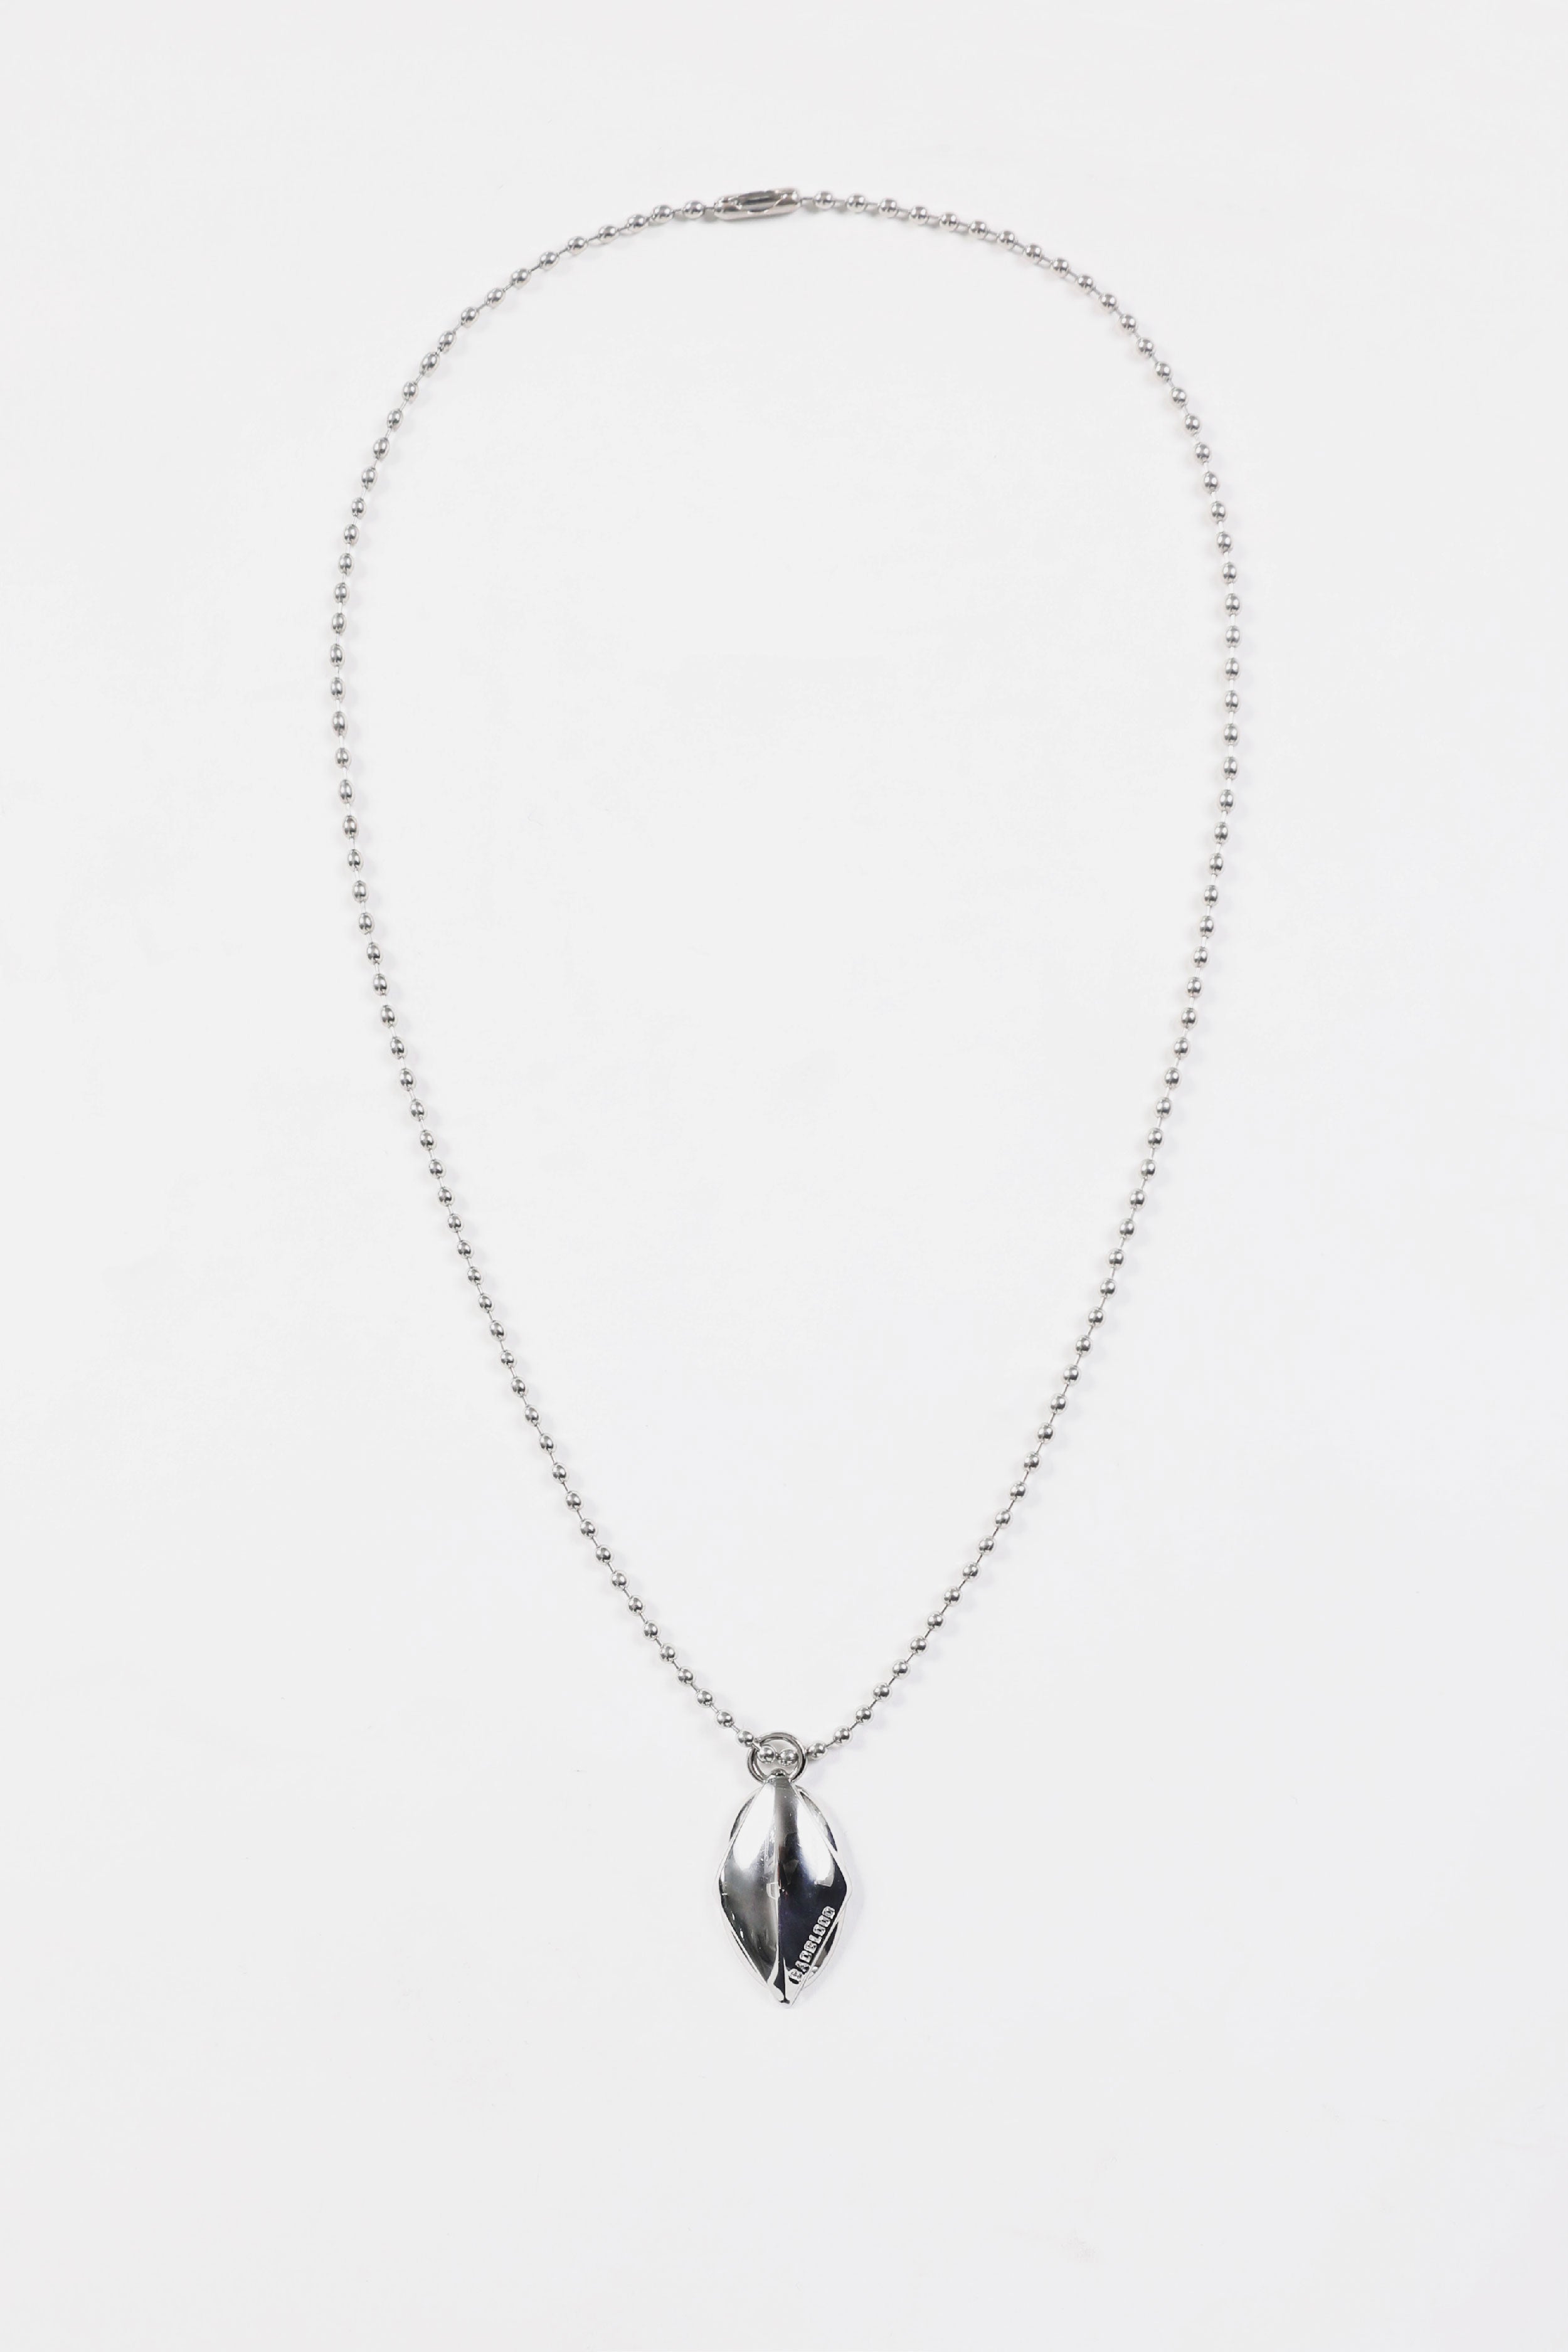 Badblood Ellipse Symbol Ball Chain Necklace Silver